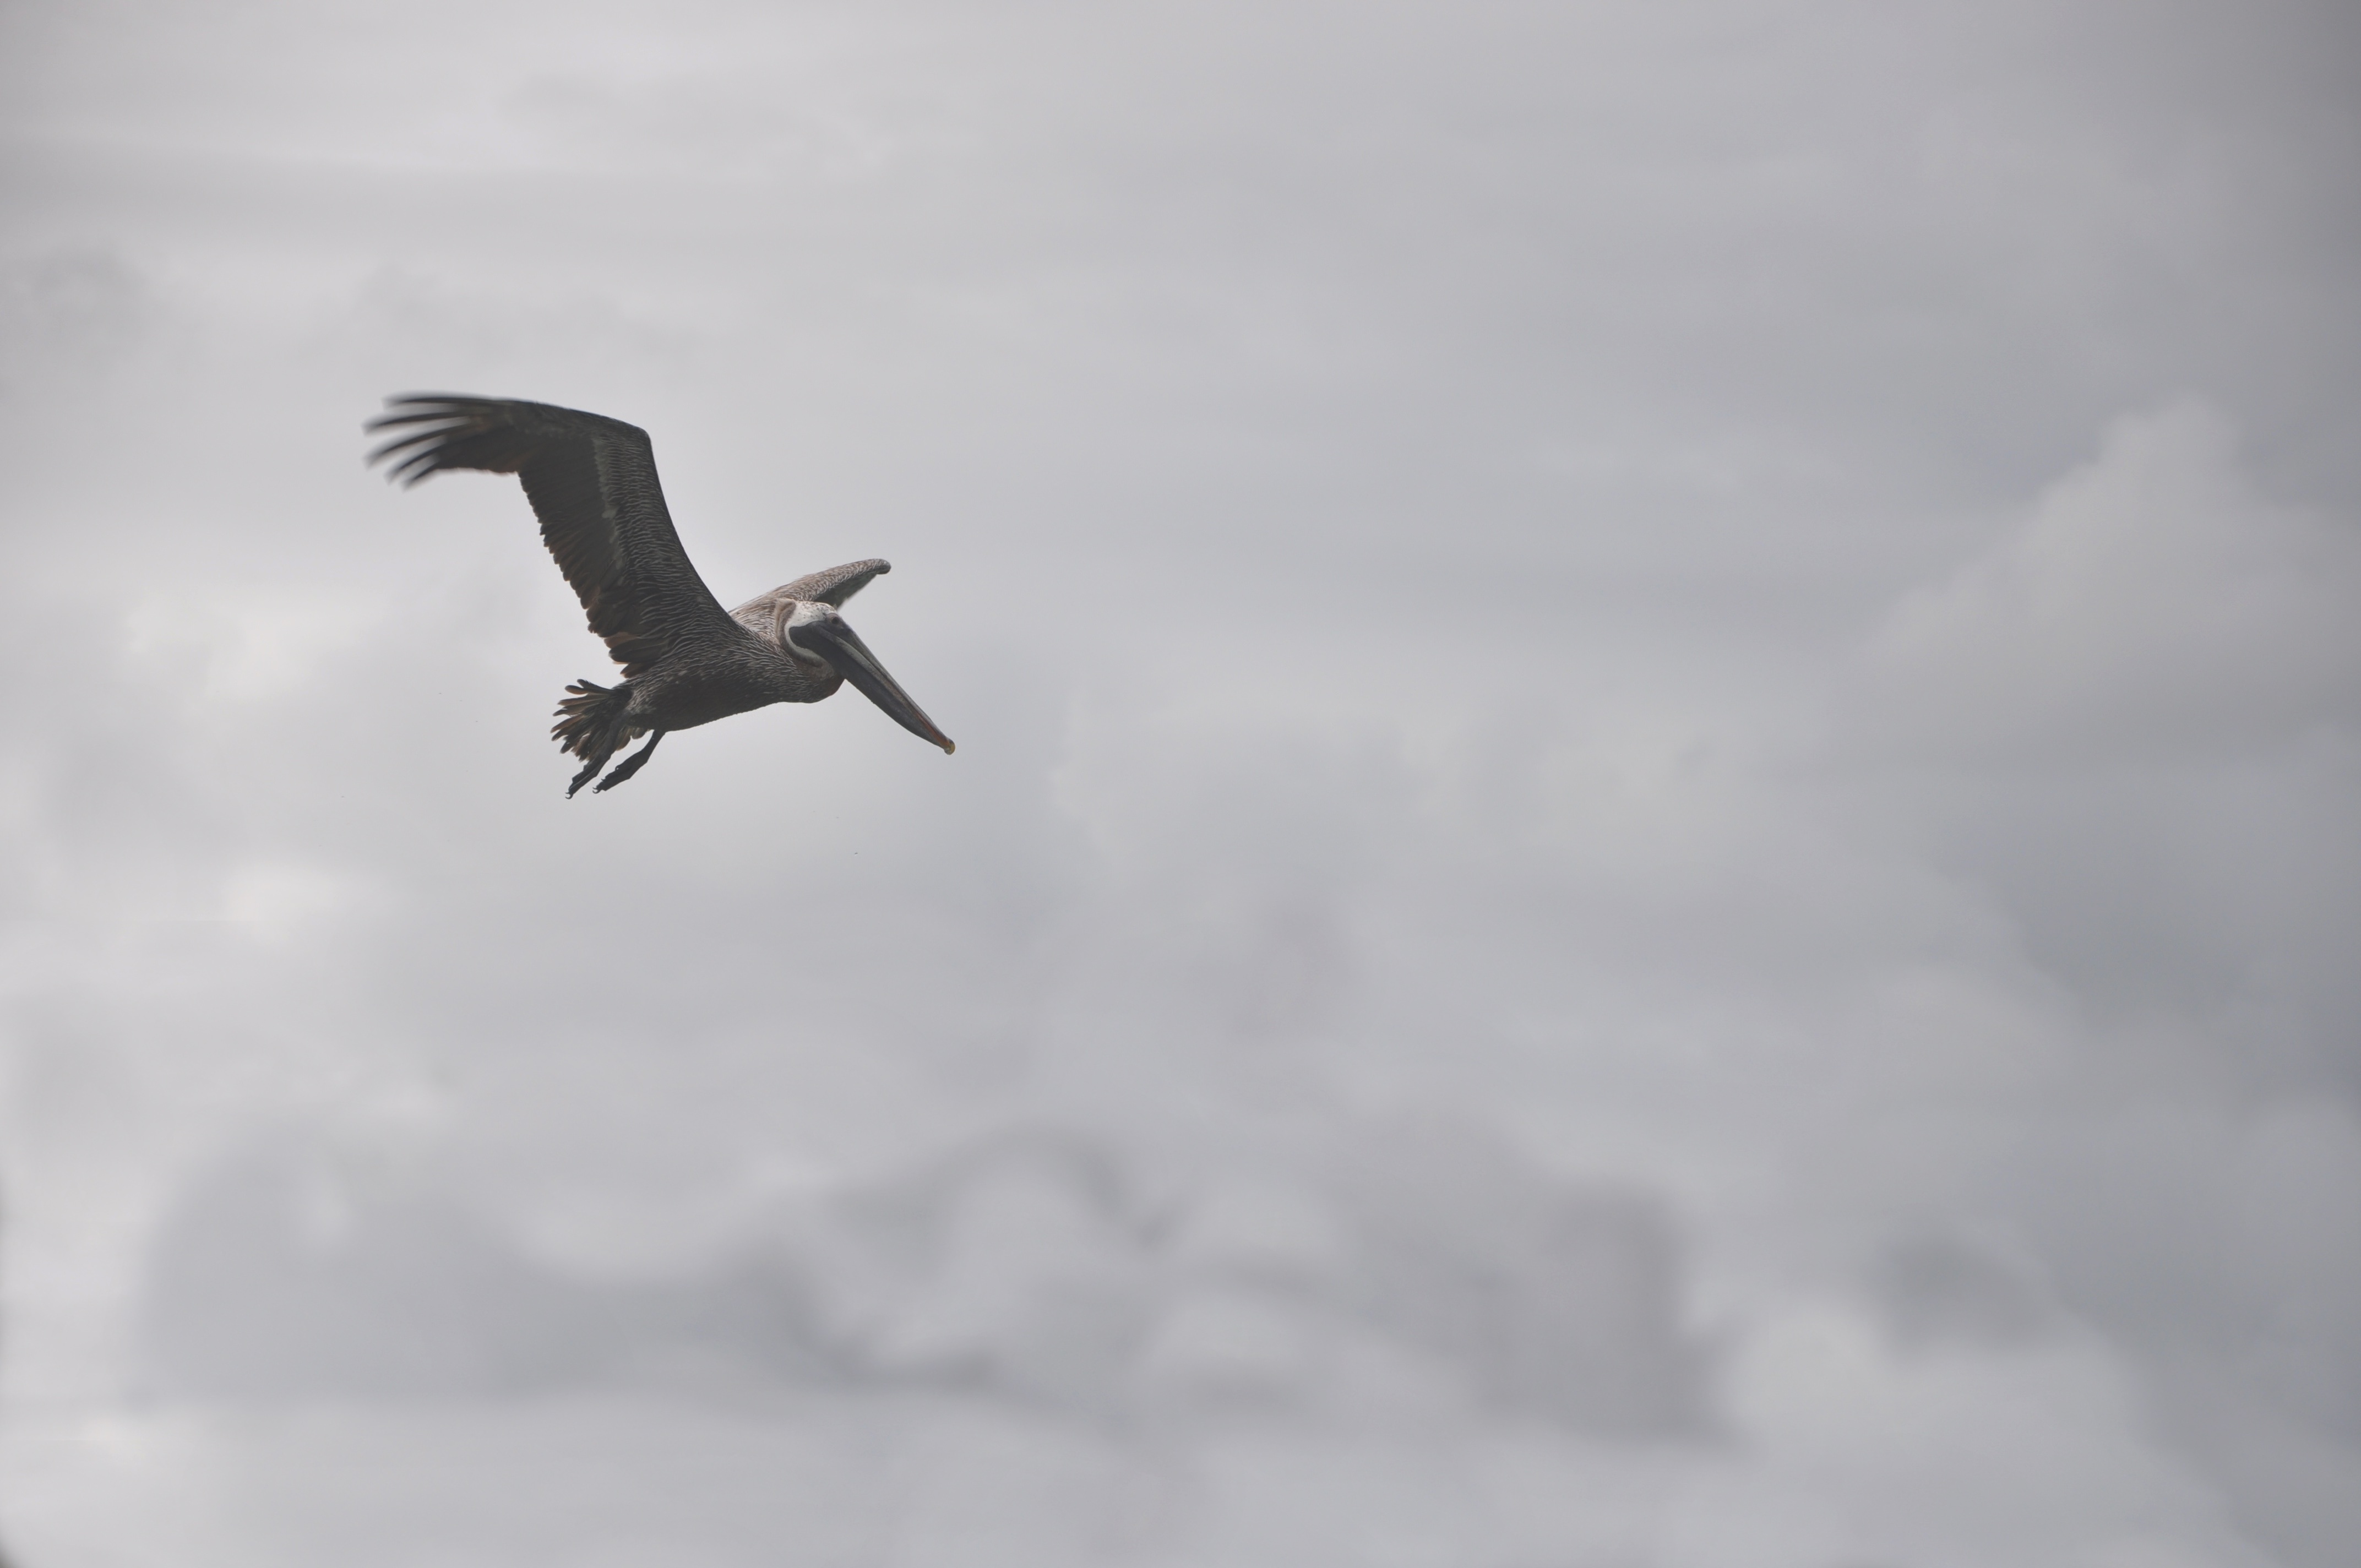 66015 Hintergrundbild herunterladen tiere, clouds, vogel, flug, pelikan, pelican - Bildschirmschoner und Bilder kostenlos